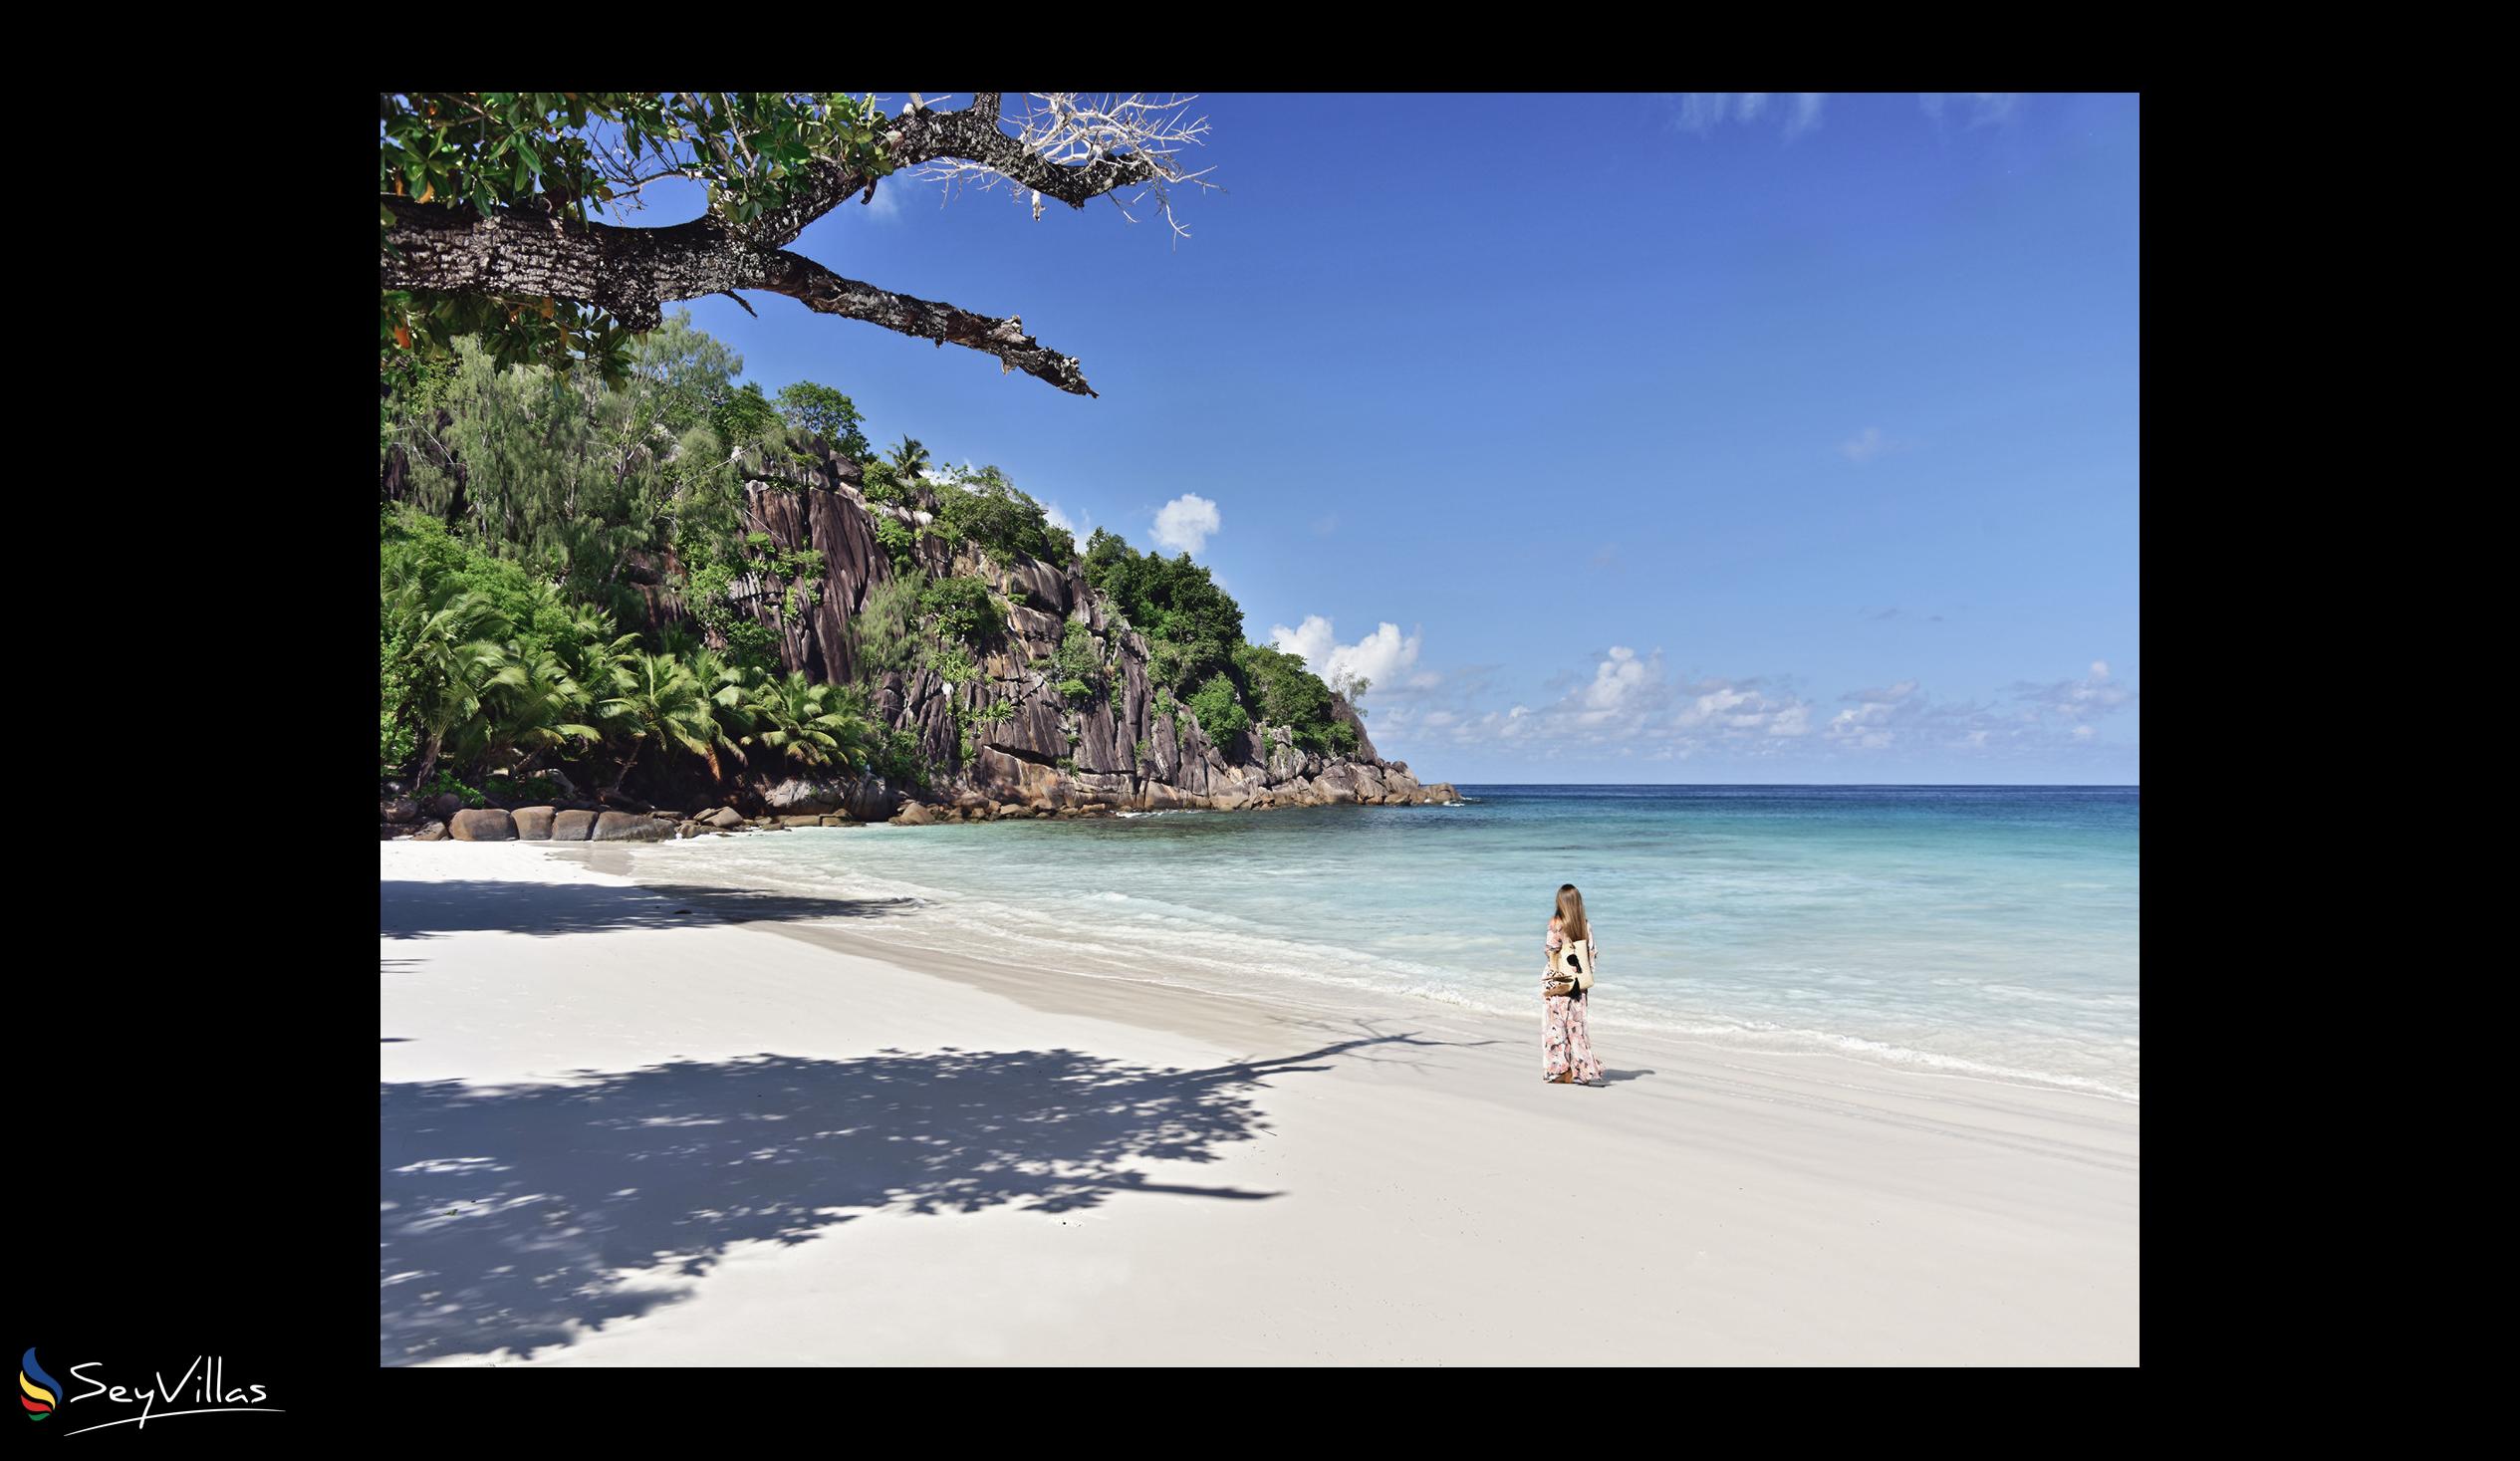 Photo 124: Four Seasons Resort - Outdoor area - Mahé (Seychelles)